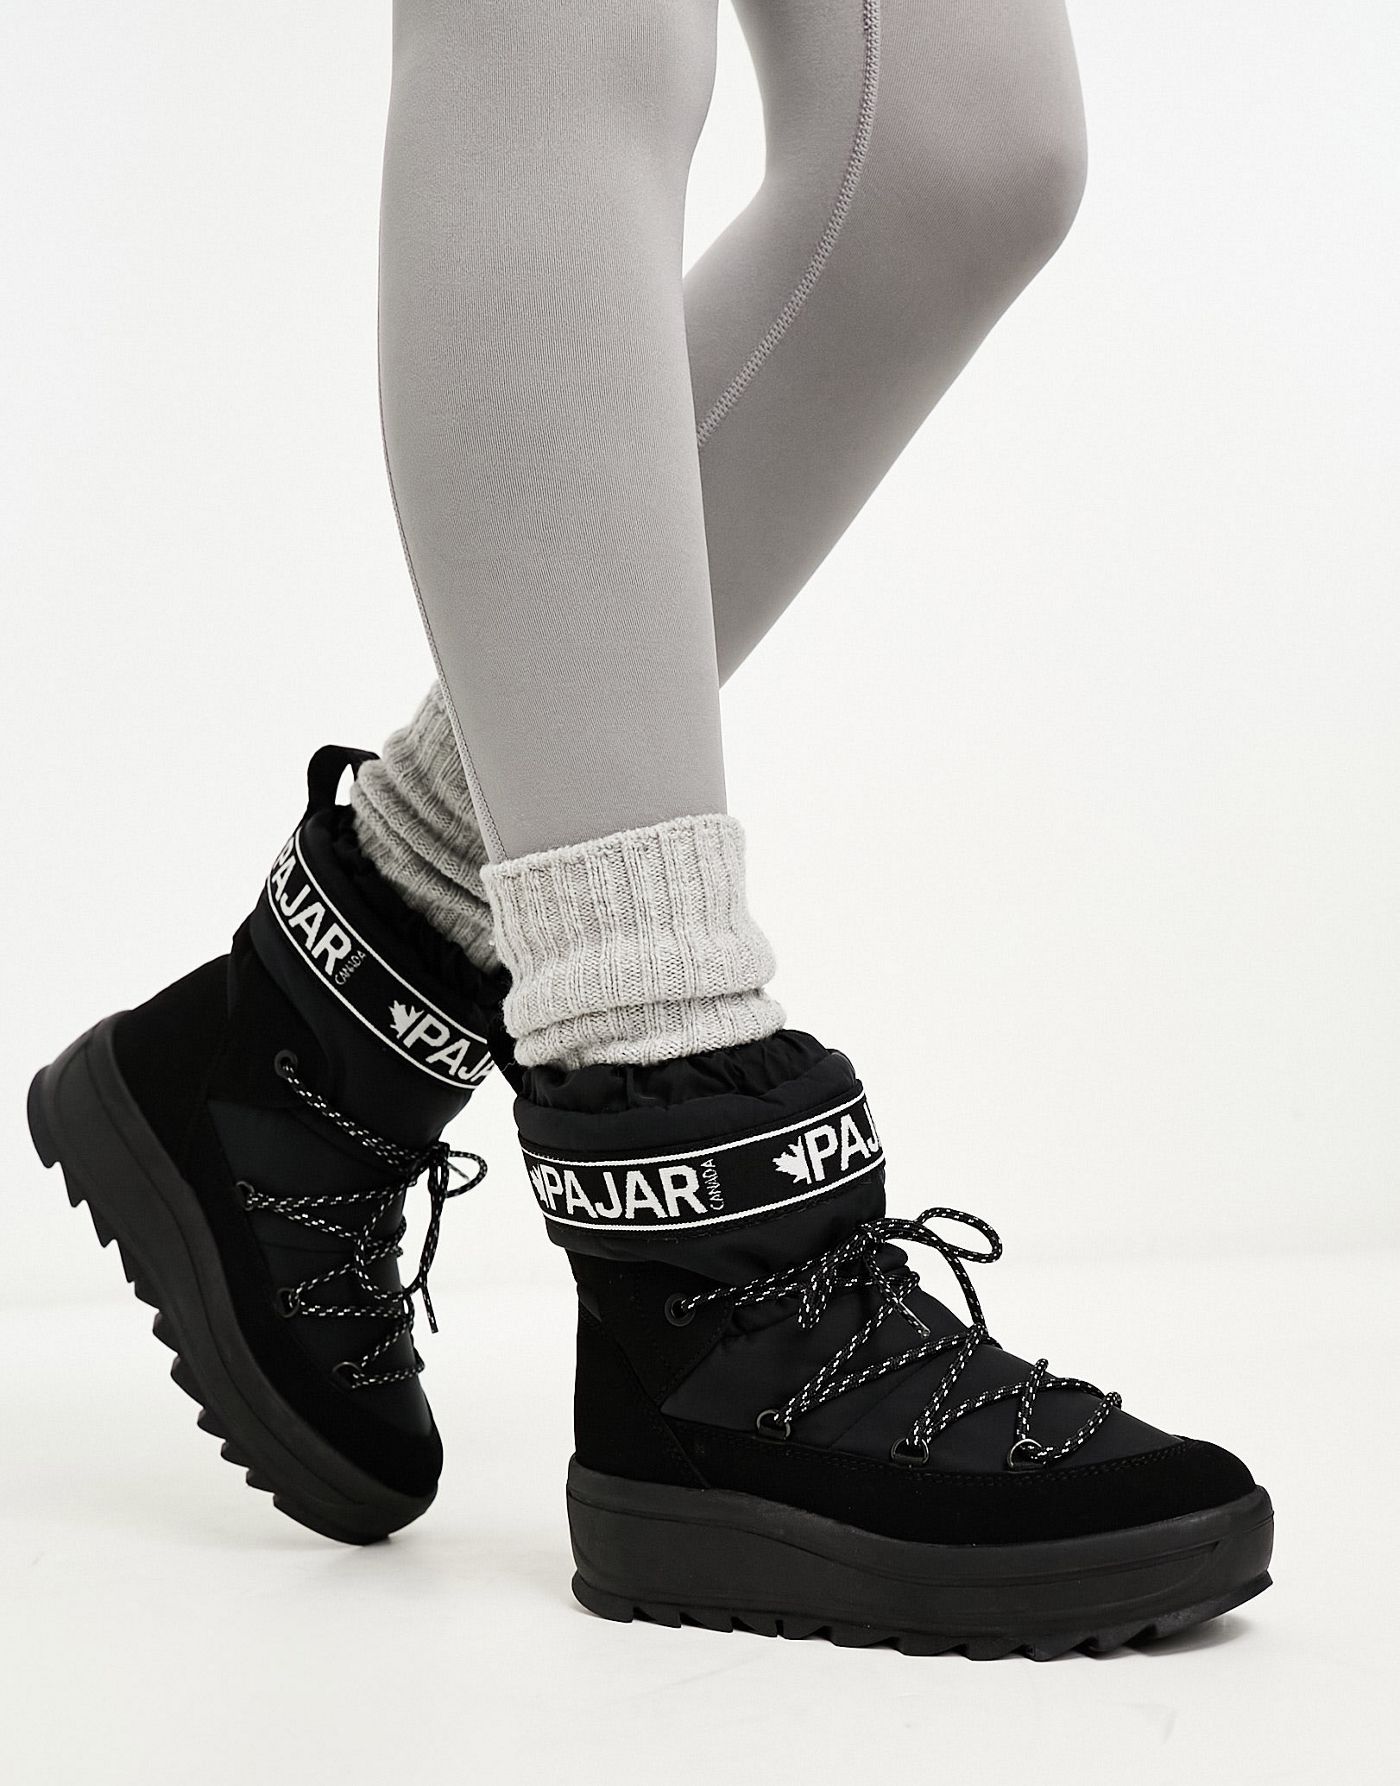 Pajar snow boots in black